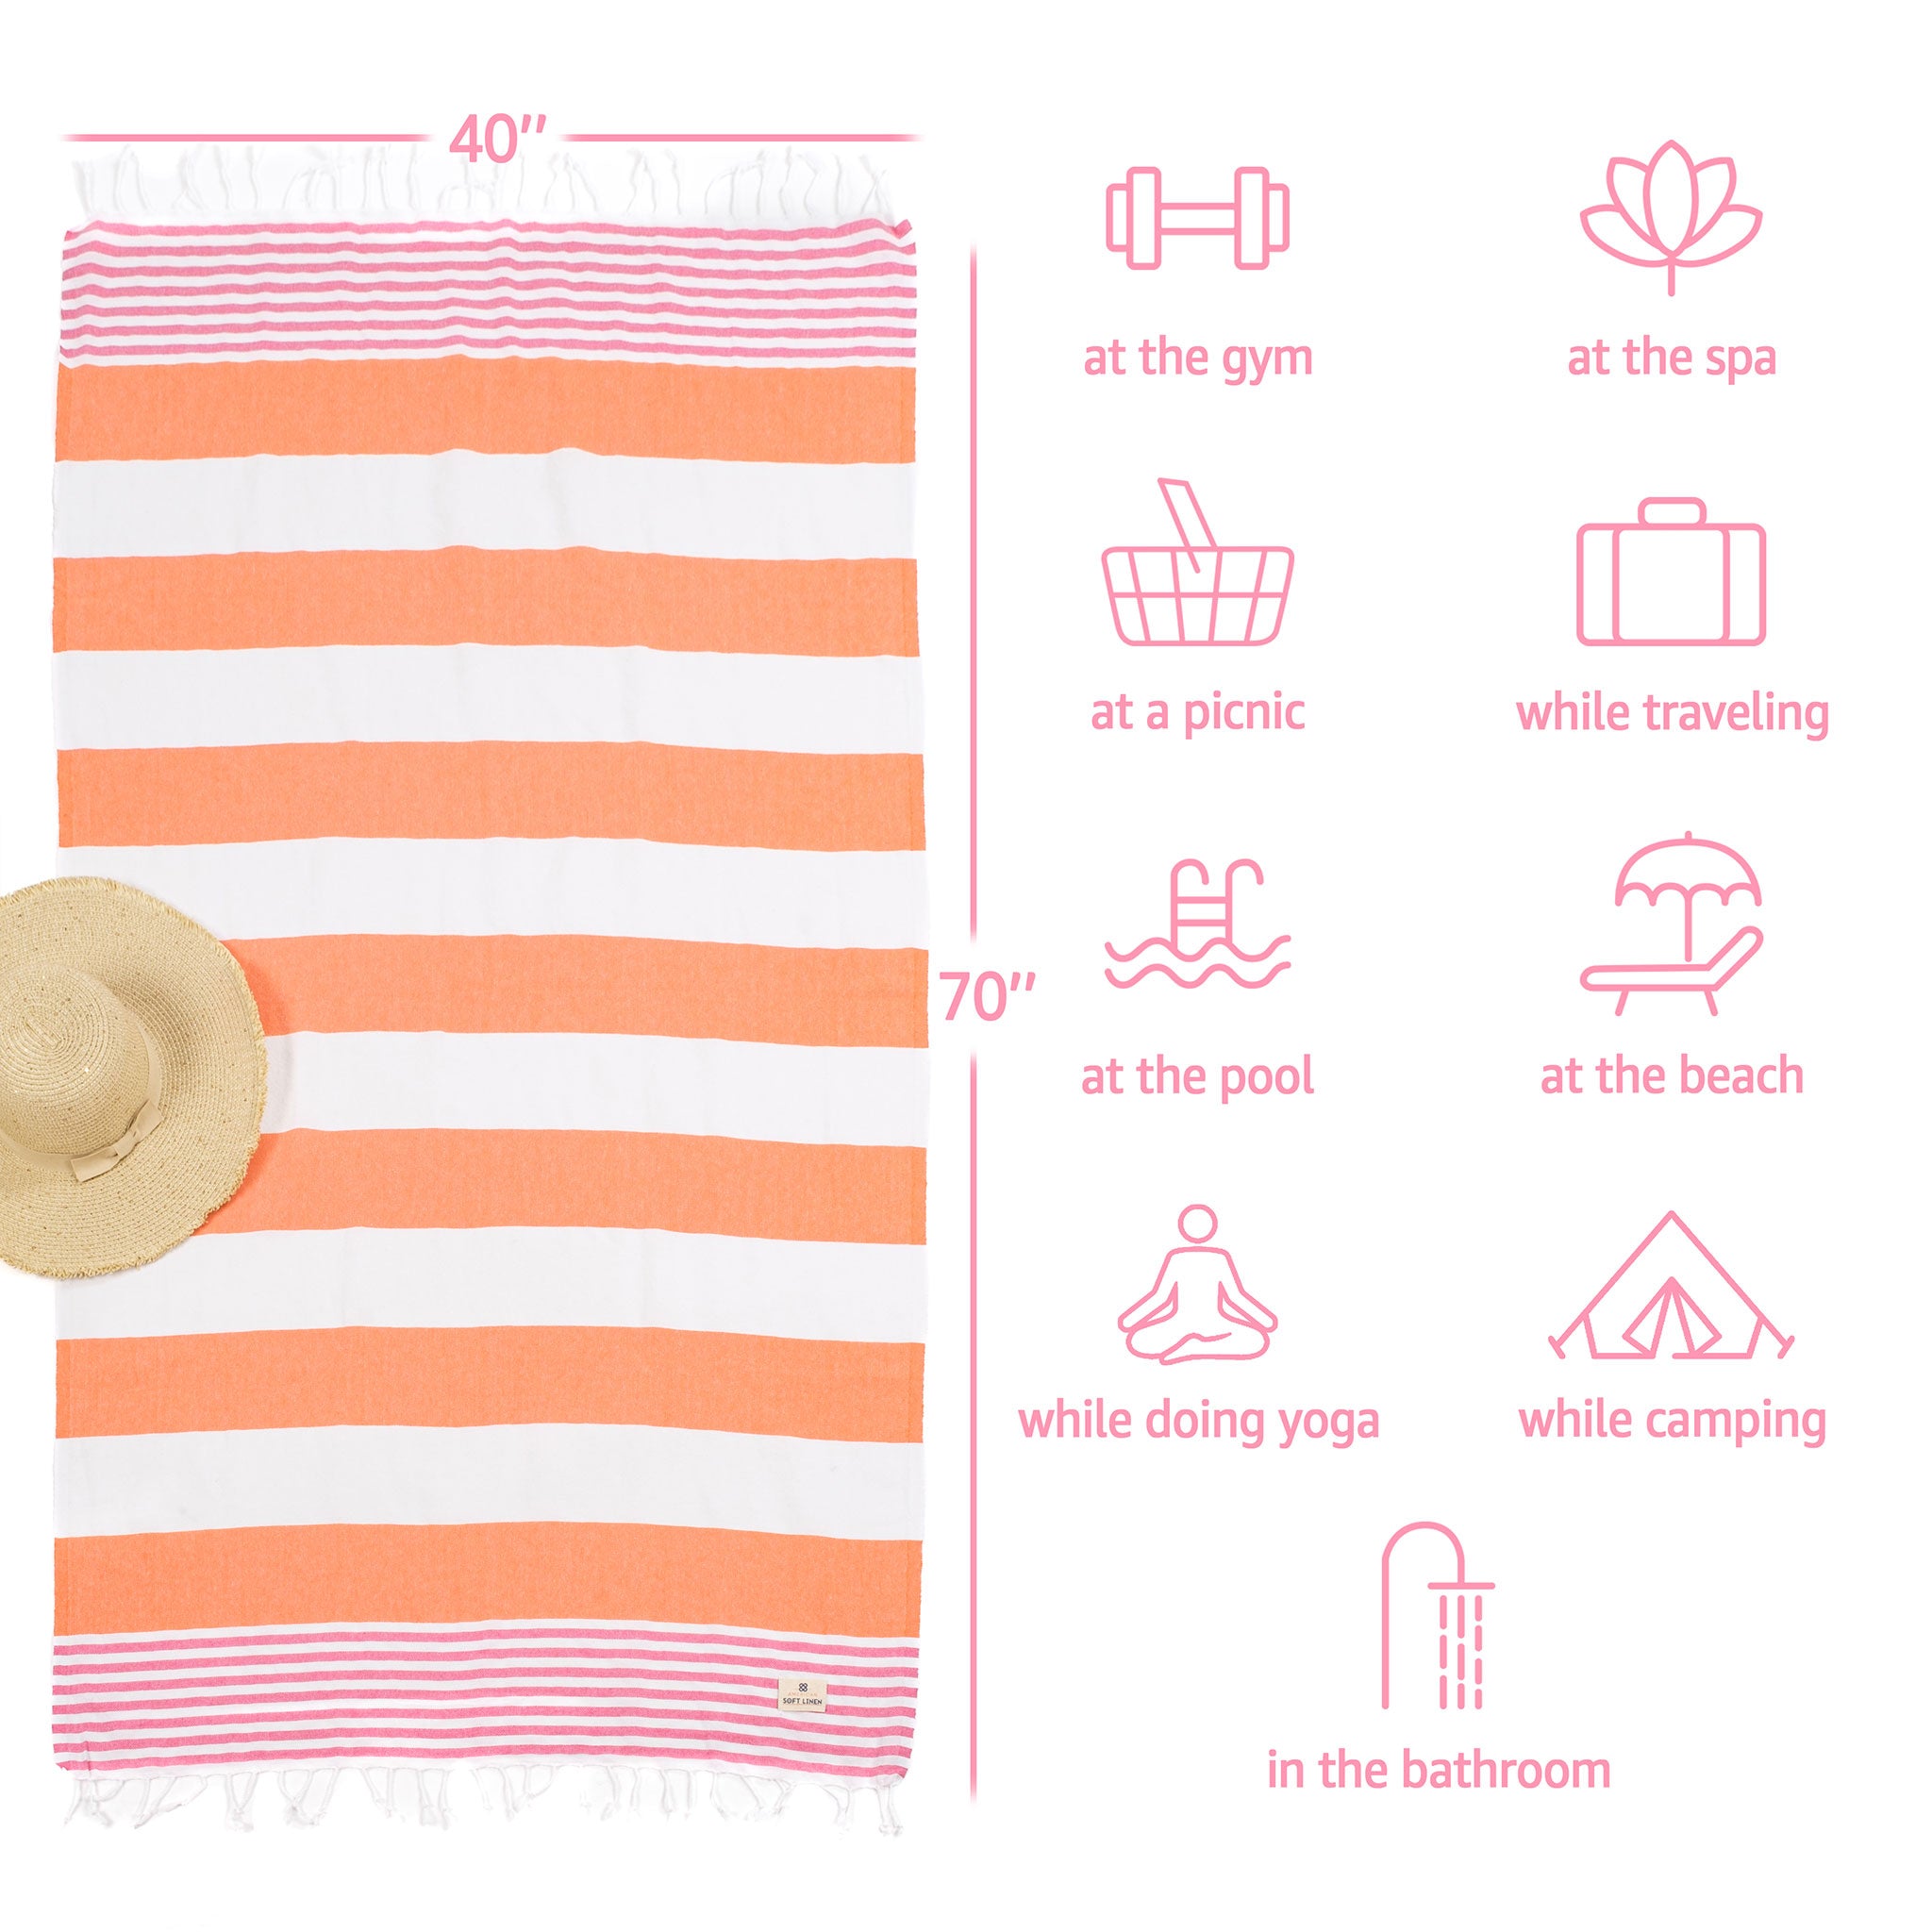 American Soft Linen - 100% Cotton Turkish Peshtemal Towels 40x70 Inches - Pink - 4